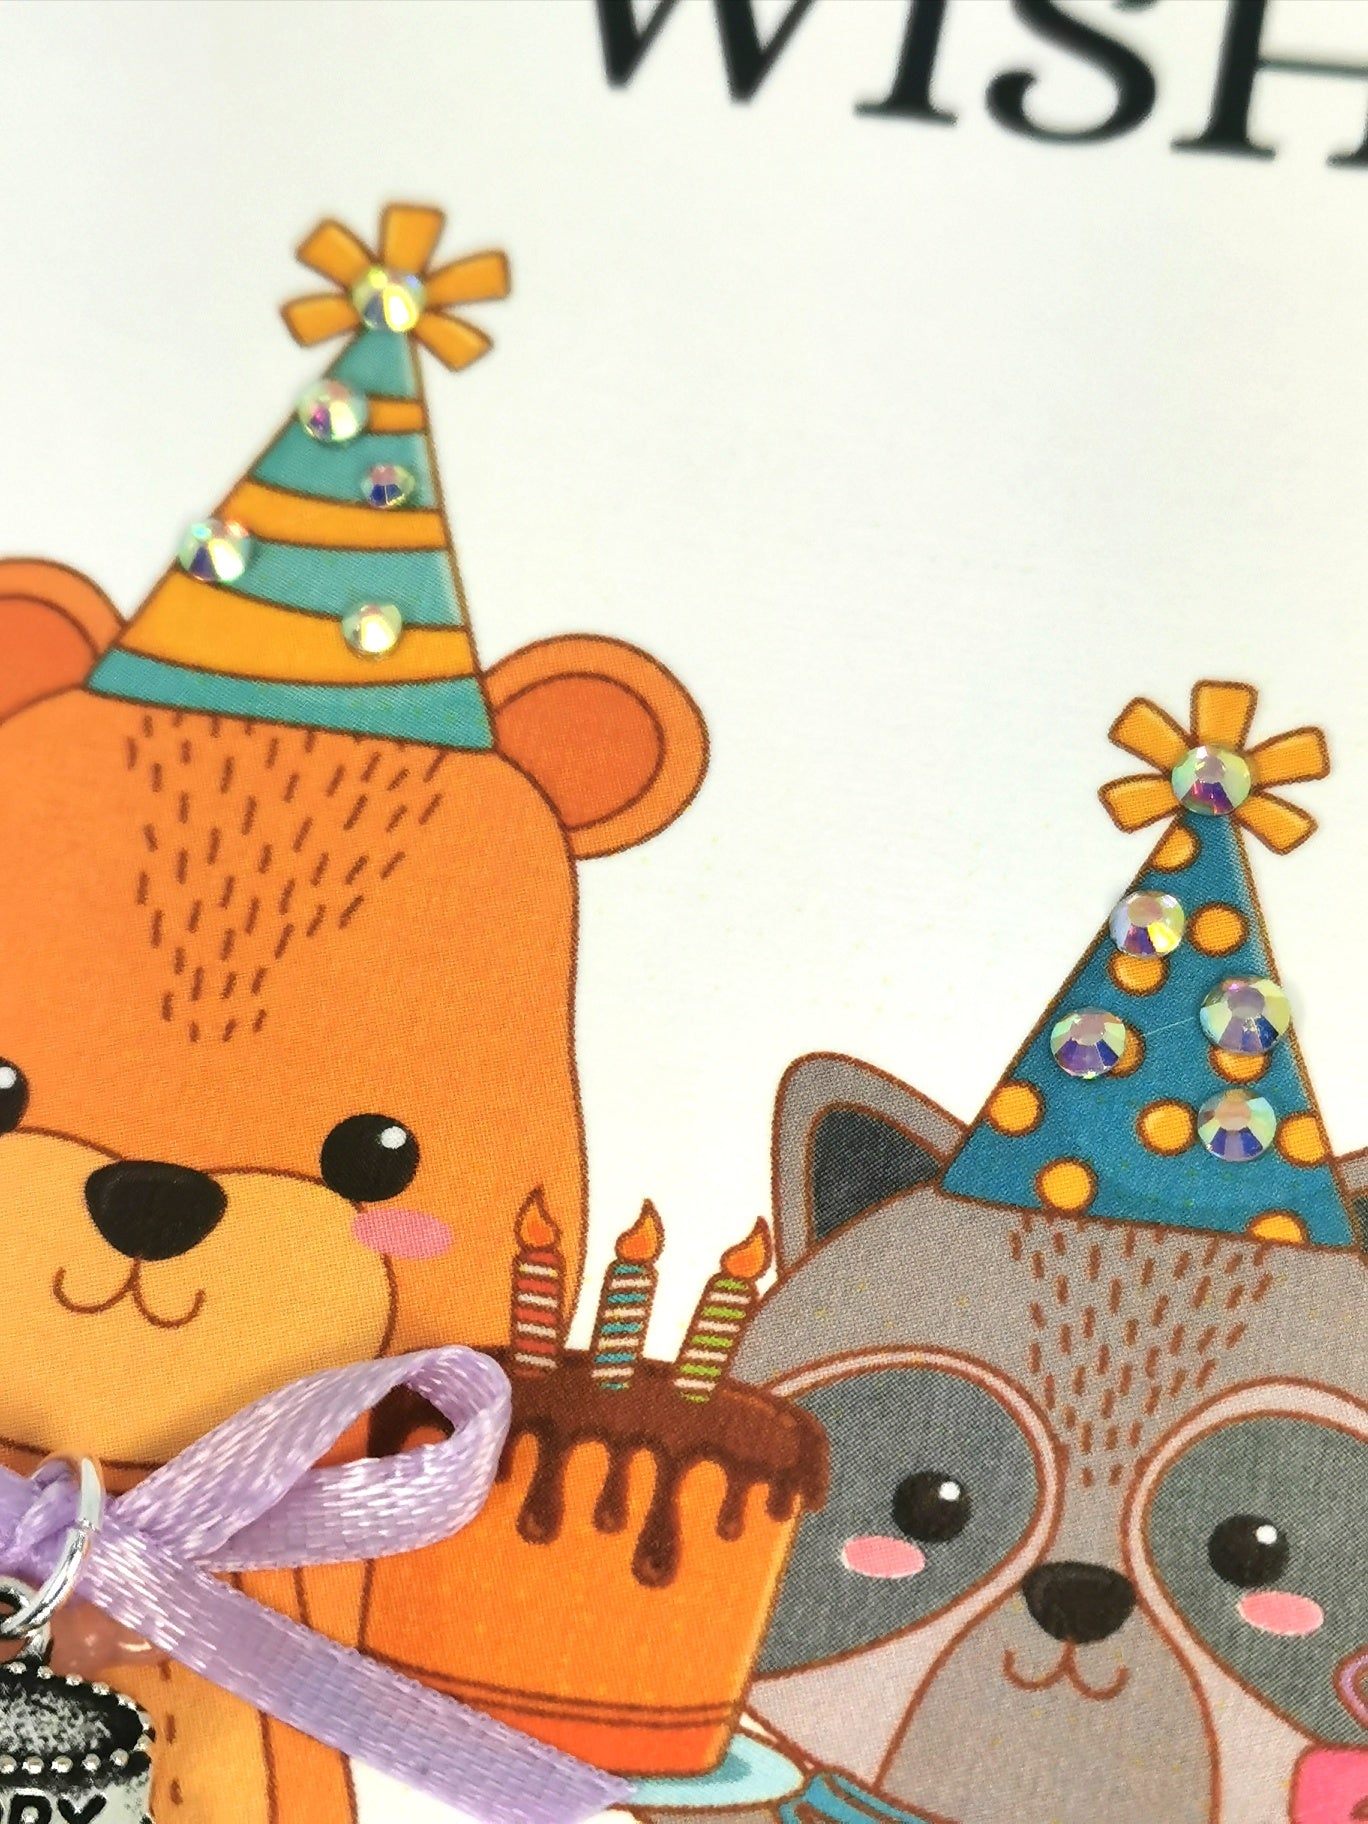 Childs Birthday Card | Make a wish Birthday card with charm | Cute Animal Birthday card